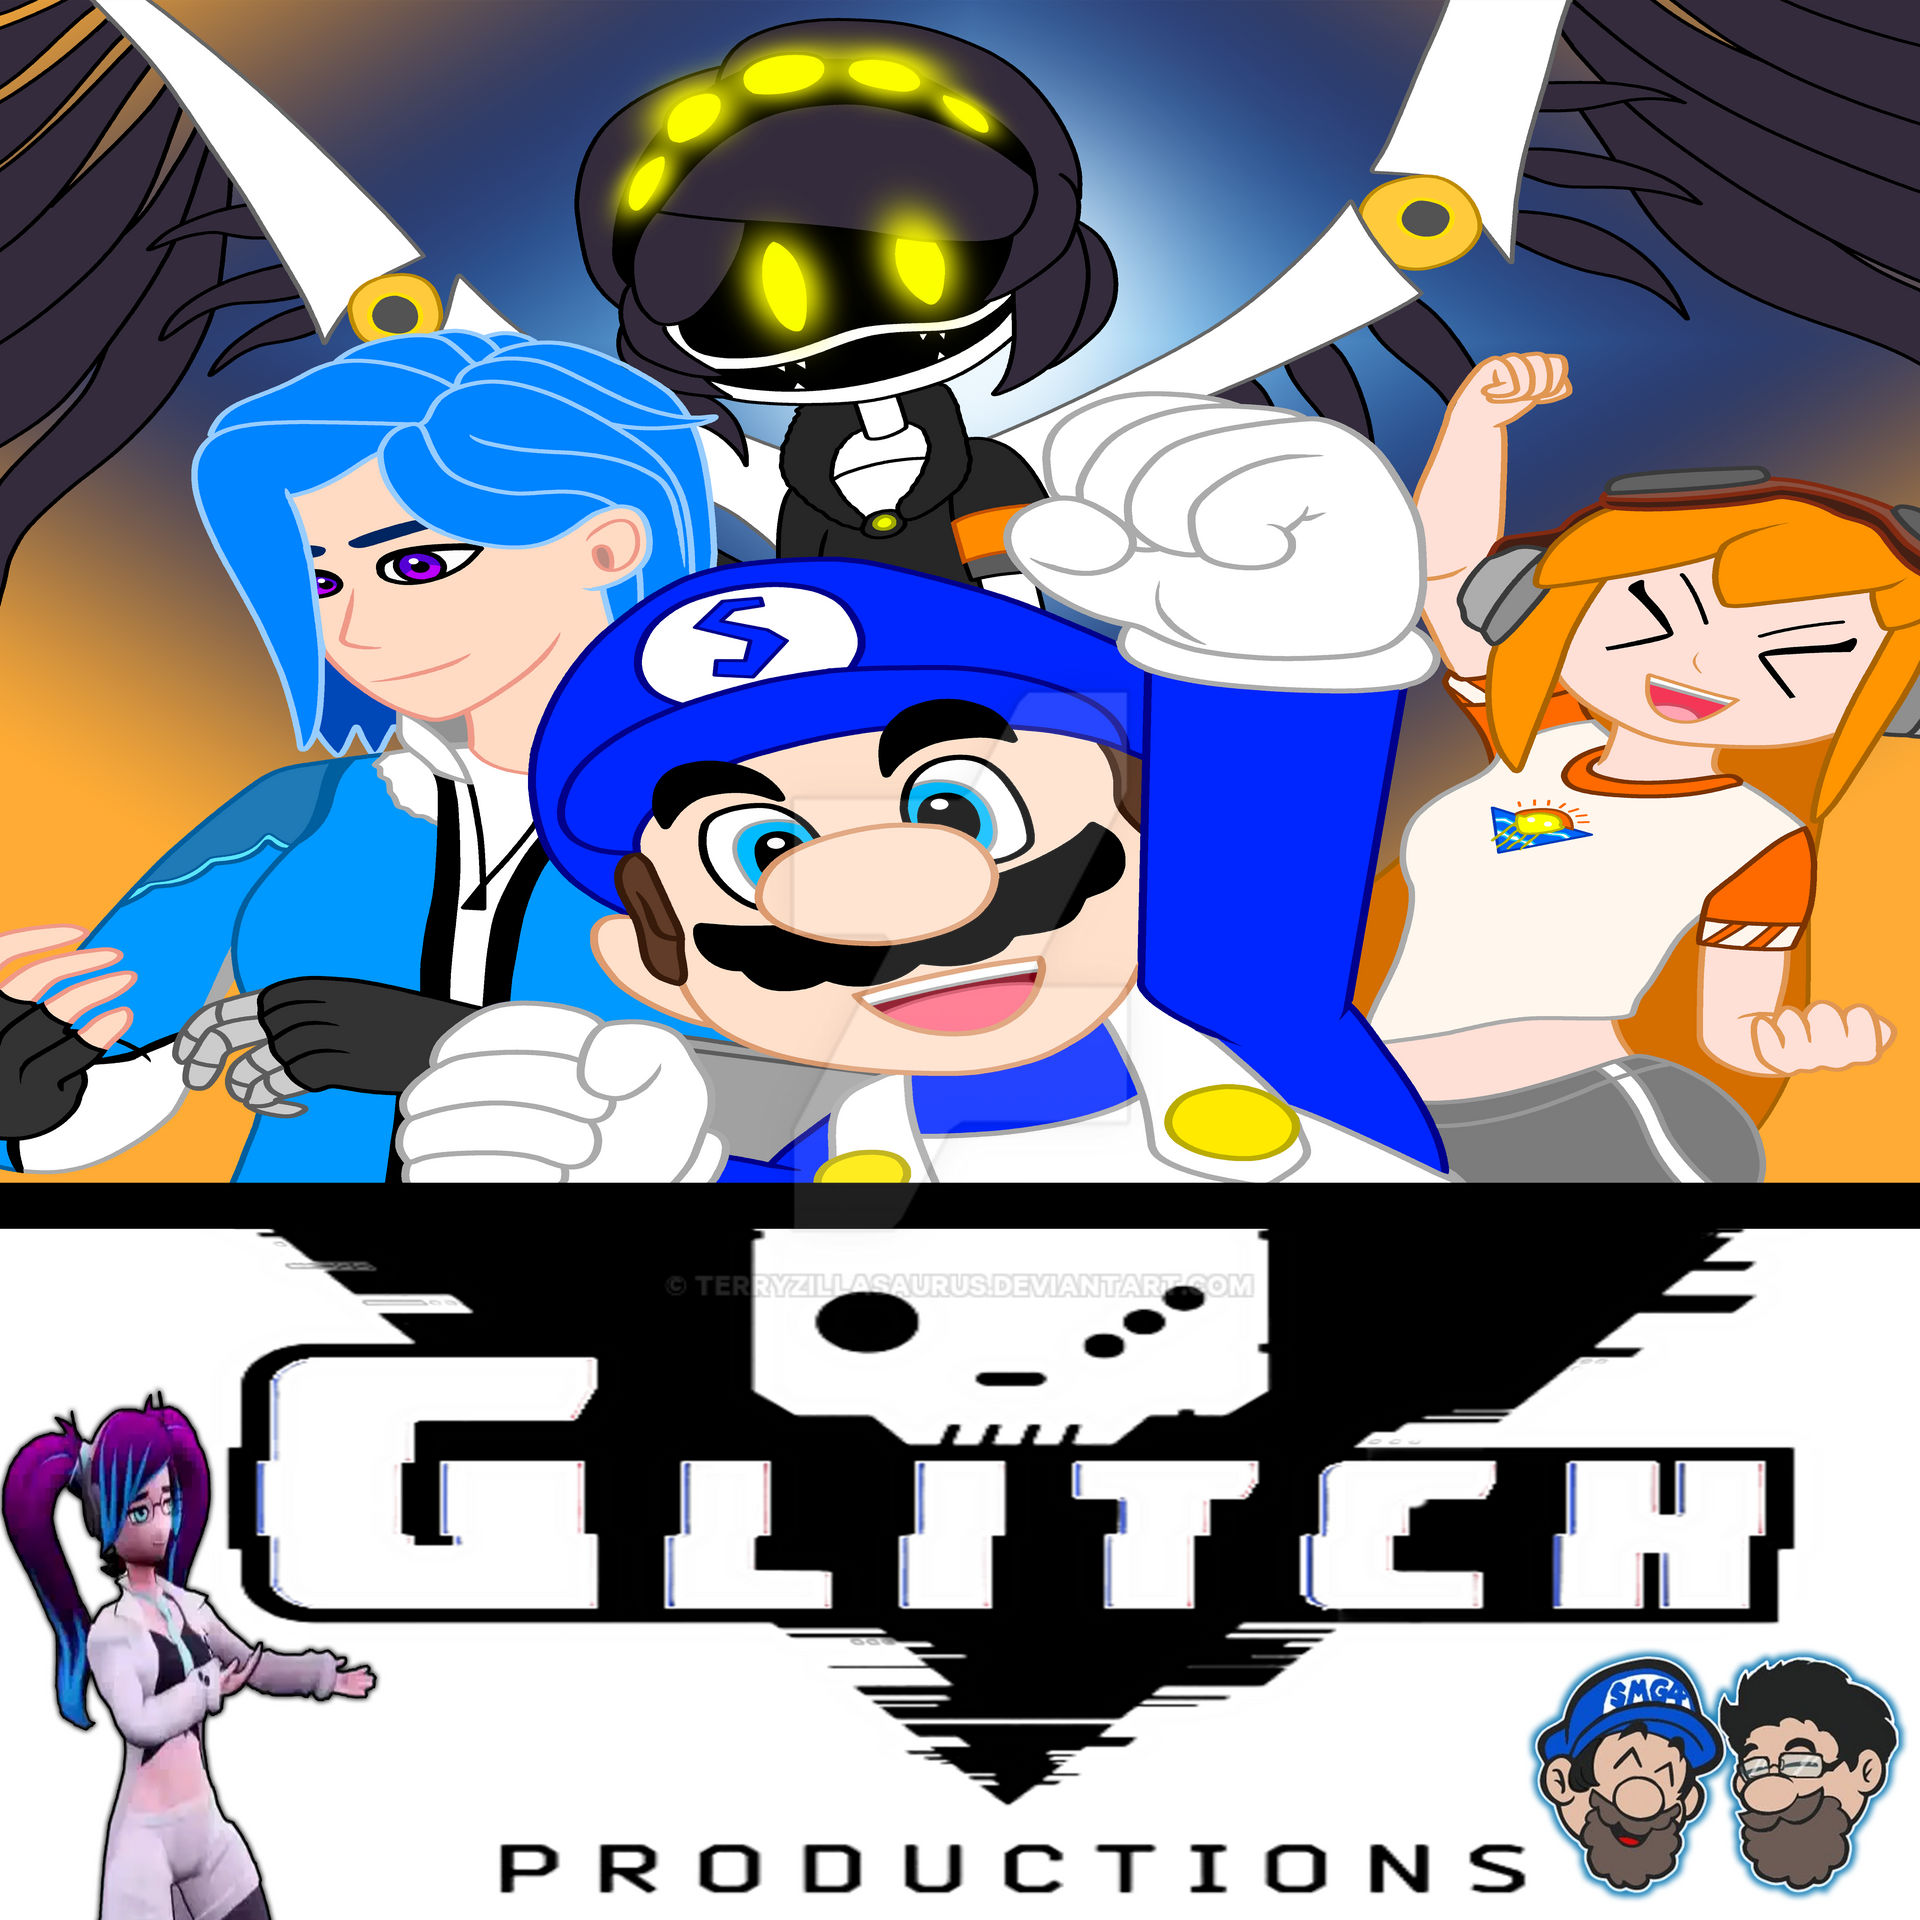 Glitch Productions Redraw : r/GlitchProductions